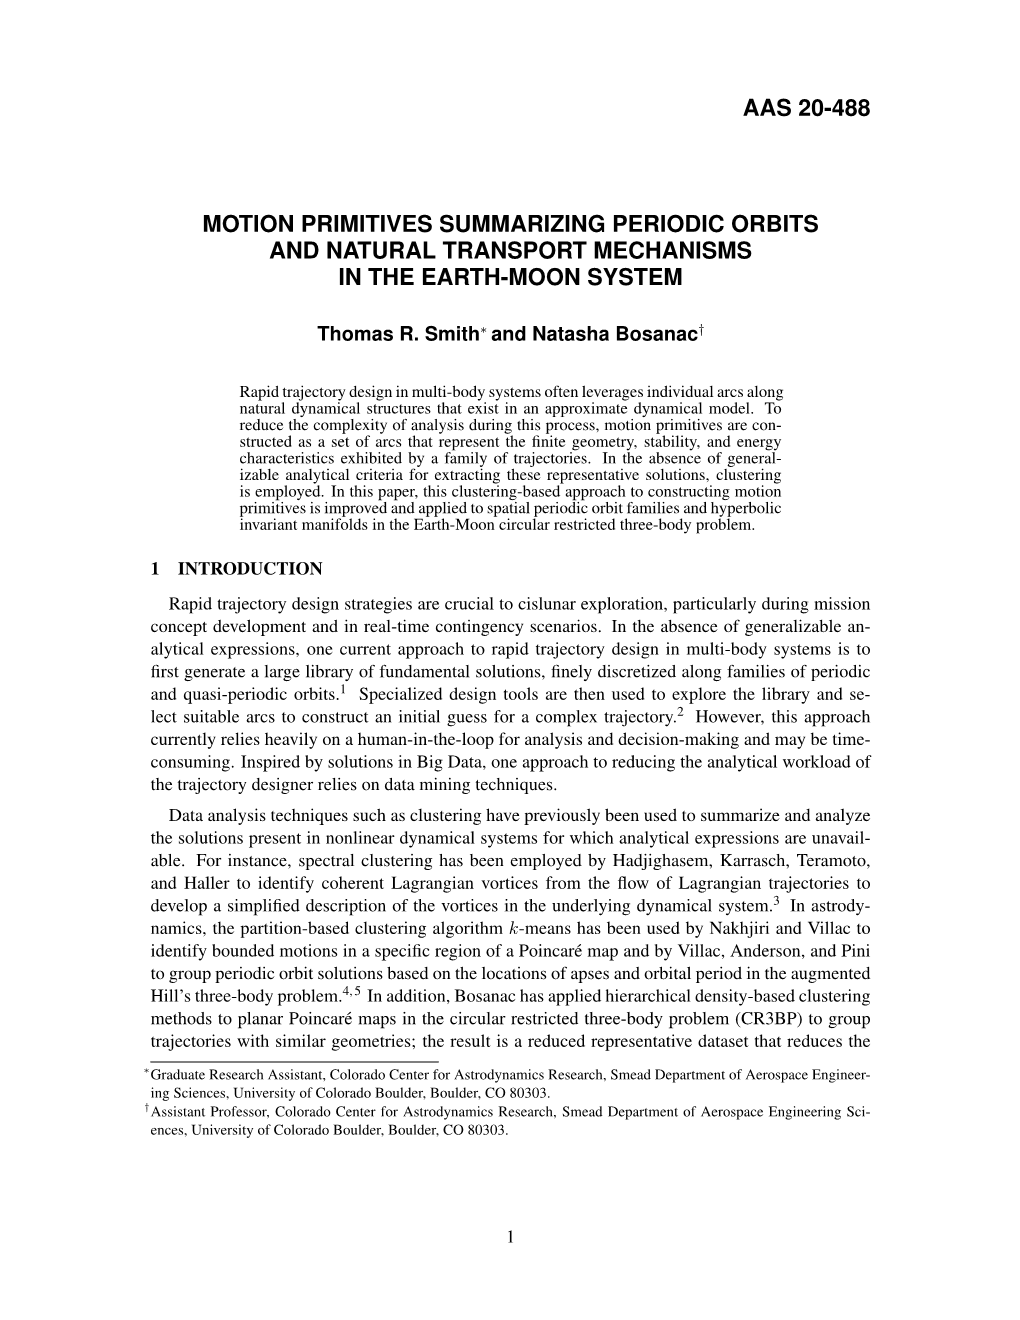 Aas 20-488 Motion Primitives Summarizing Periodic Orbits And